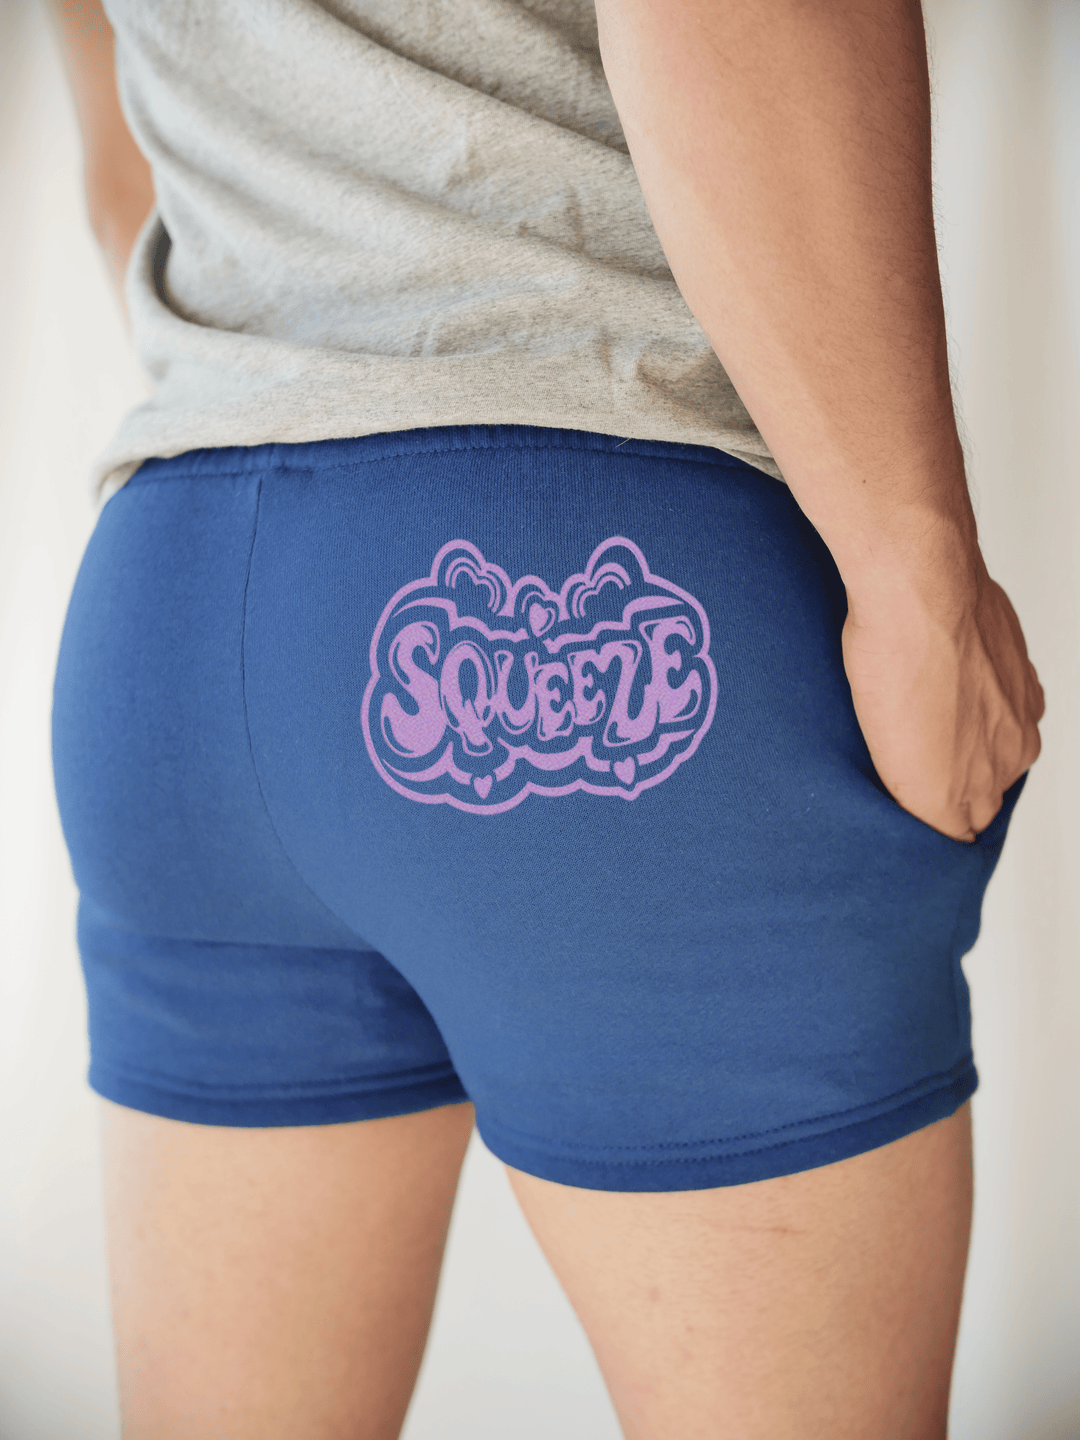 PixelThat Punderwear Shorts Royal Blue / S / Back Squeeze Men's Gym Shorts